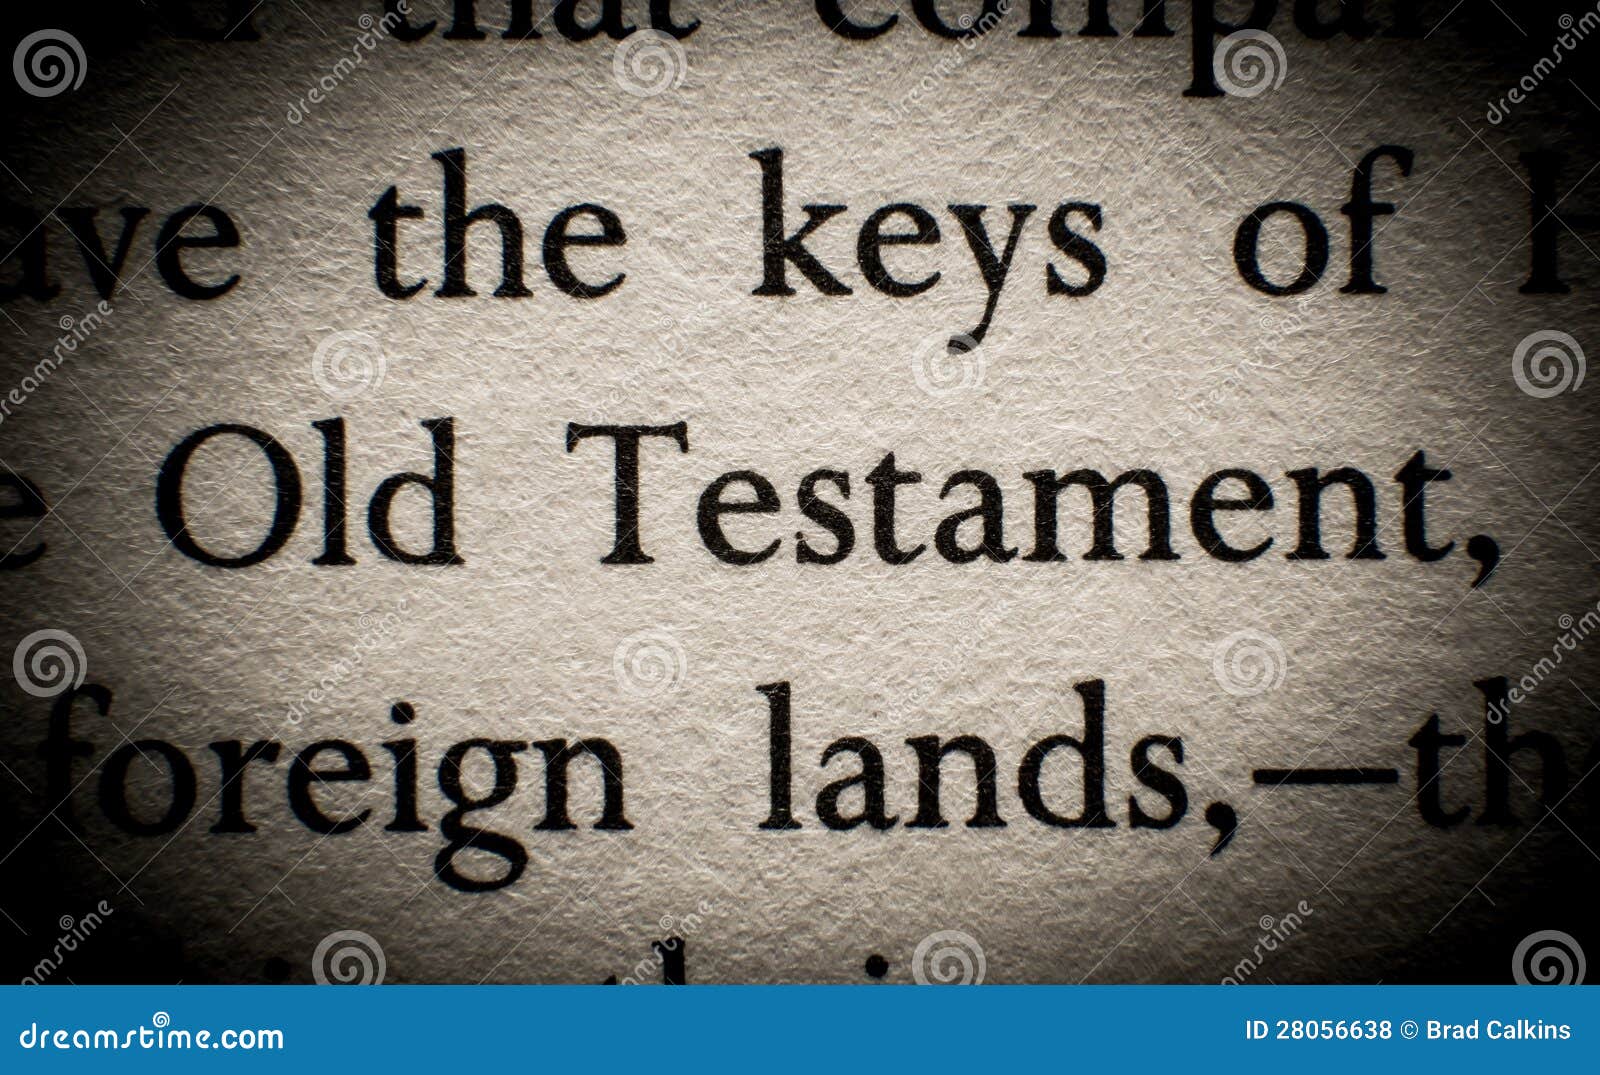 old testament